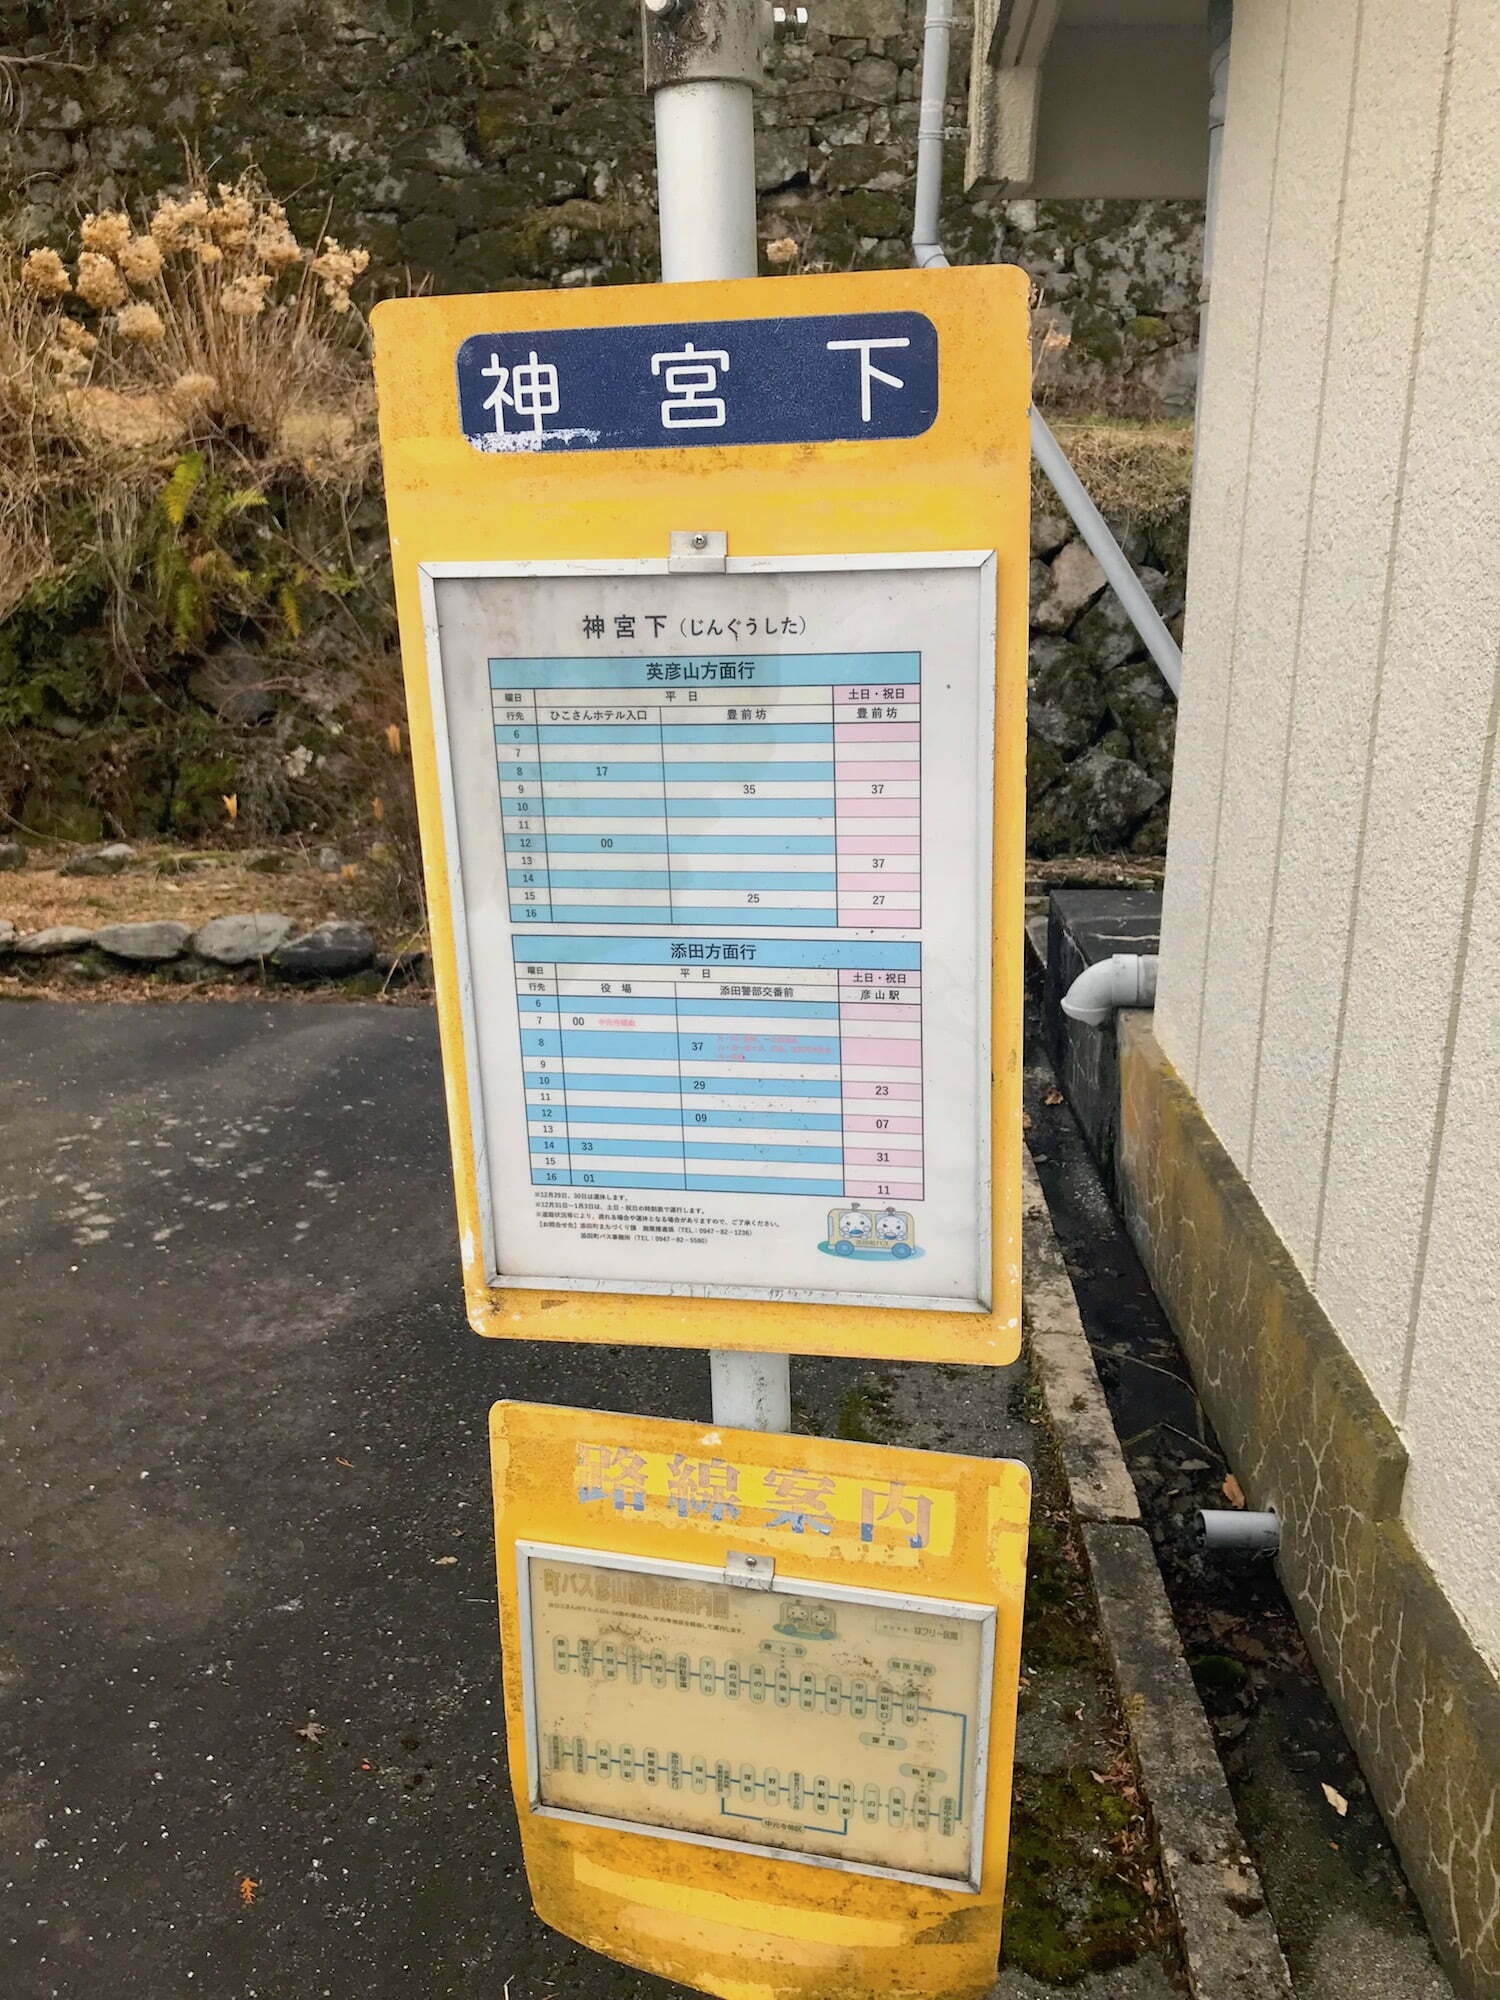 Bus stop "Jingu Shita"maybe the nearest one to Shrine